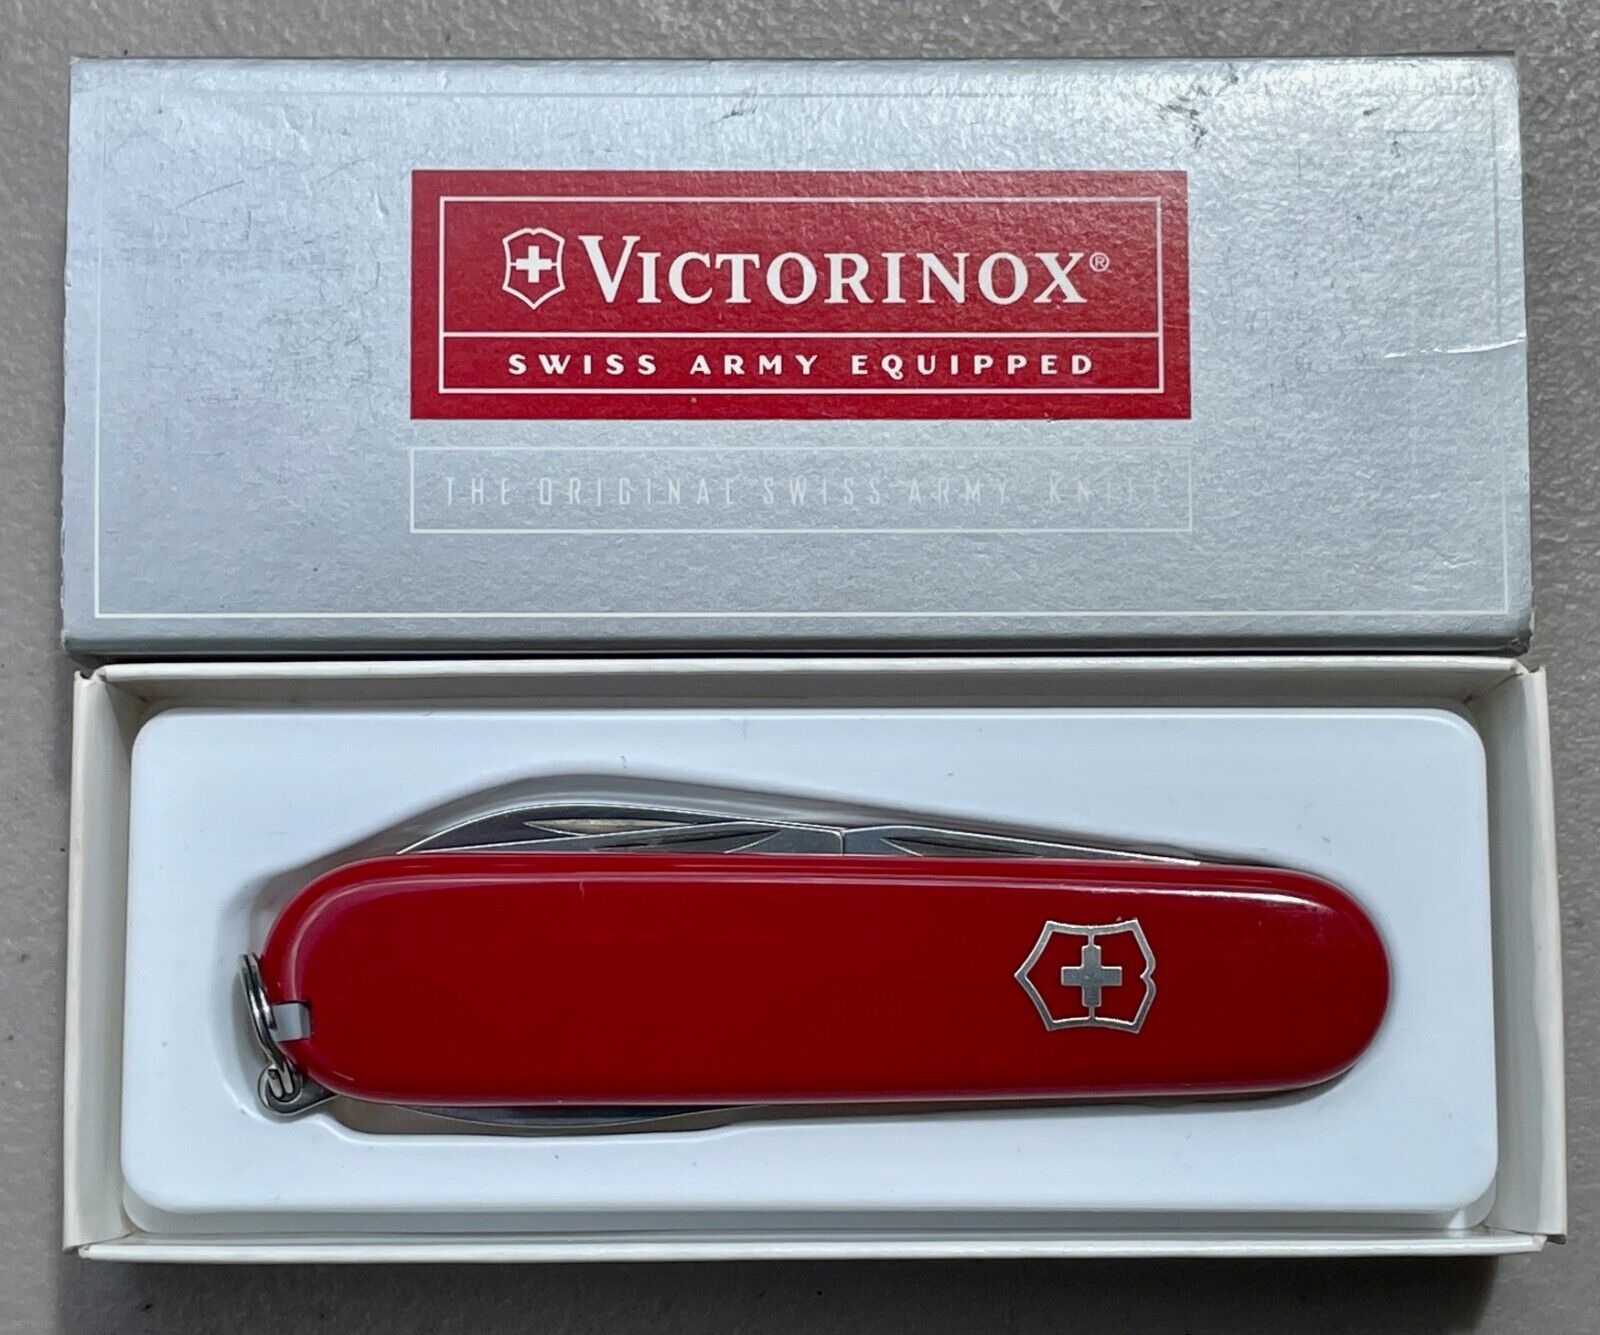 Victorinox NOS Original Swiss Army Knife Tinker Boxed New Old Stock Switzerland